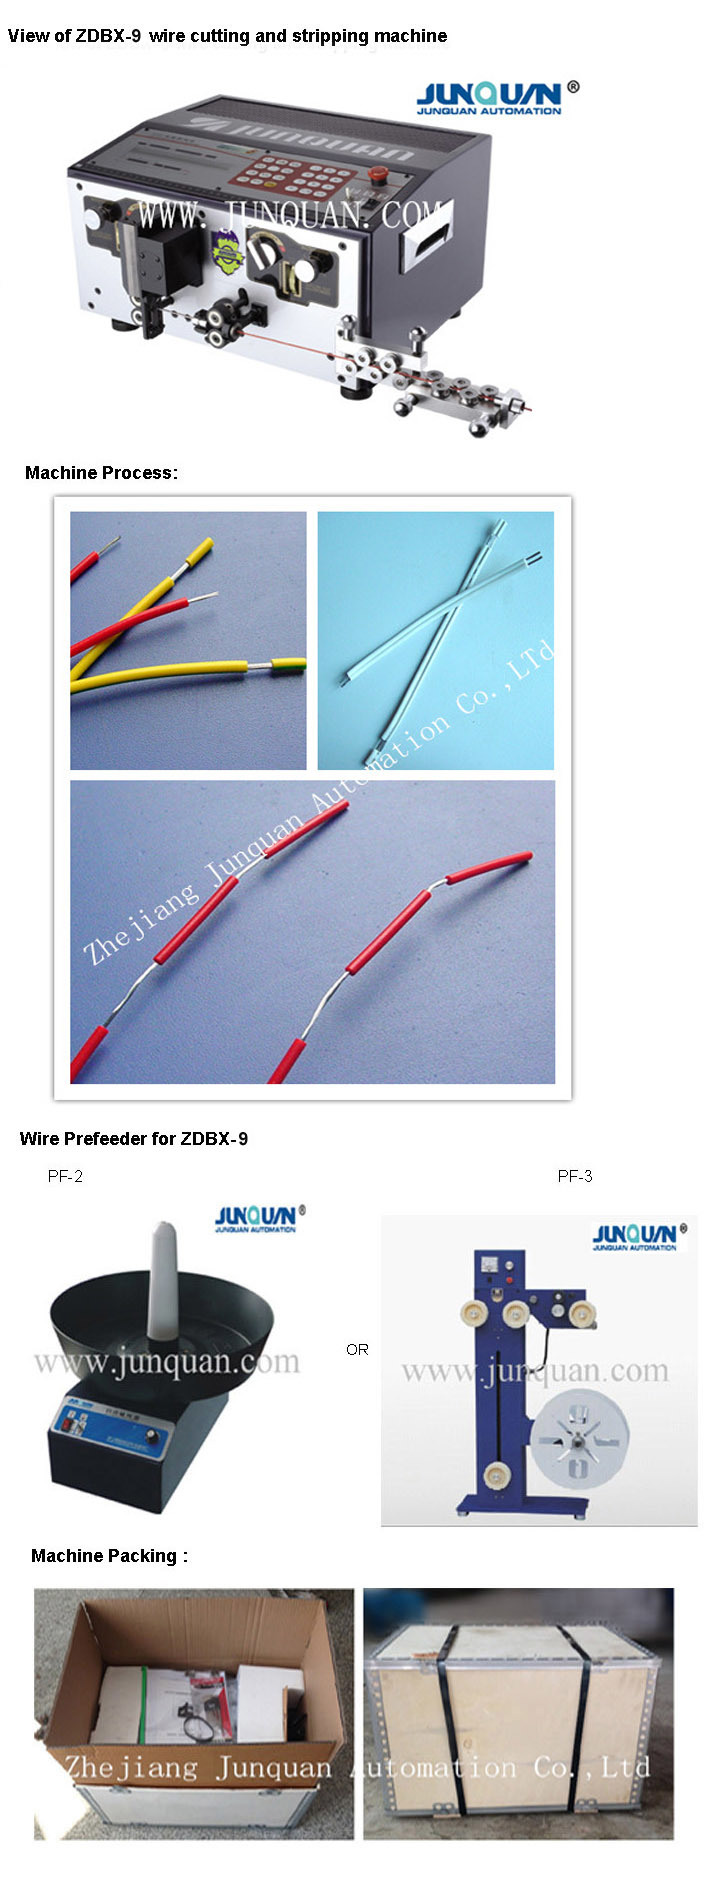 Wire Cutting and Stripping Machine (ZDBX-9)